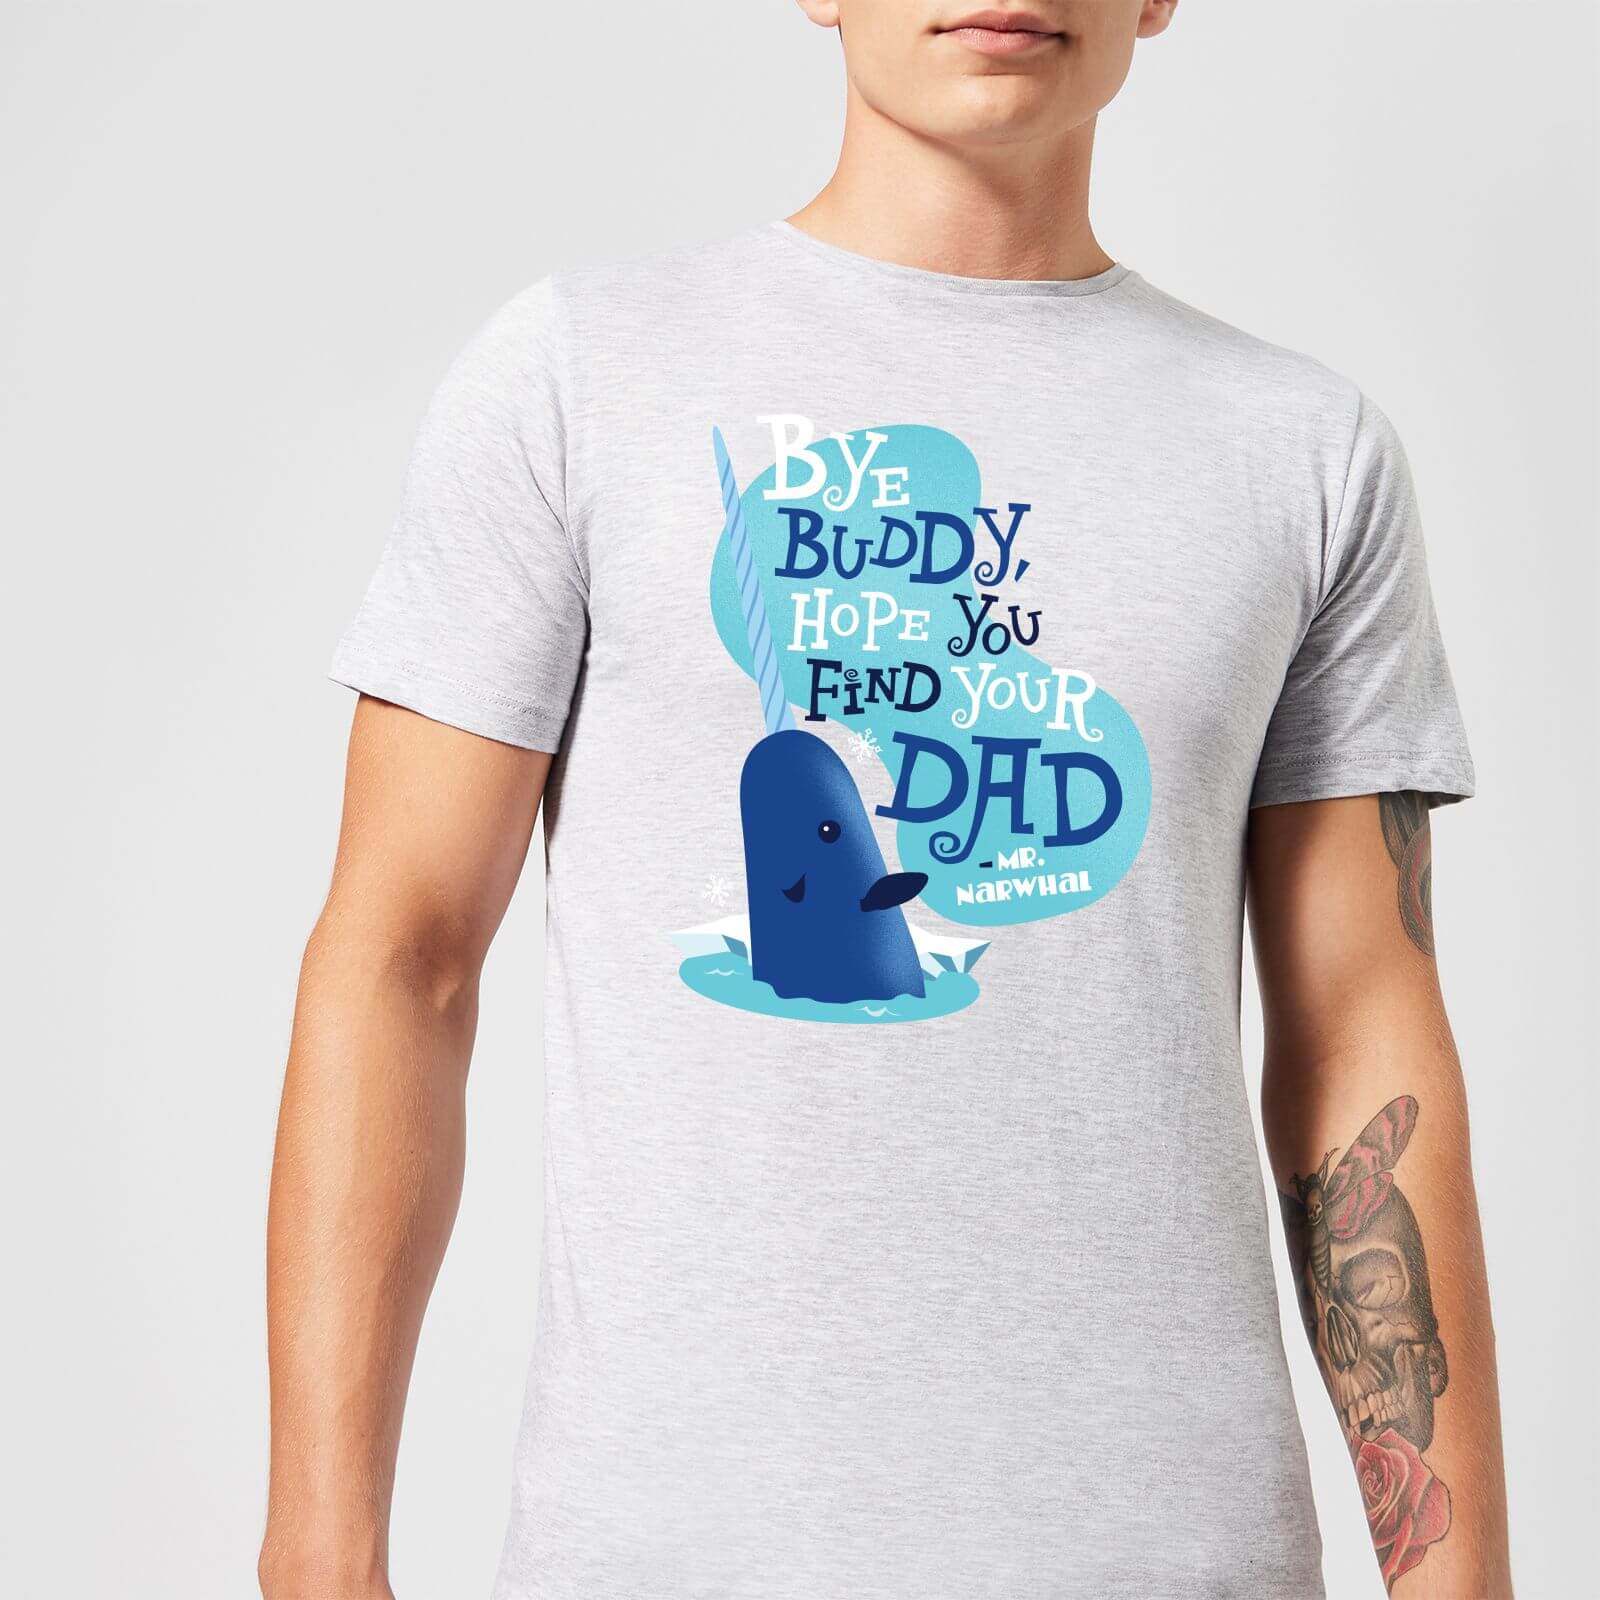 Elf Bye Buddy Men's Christmas T-Shirt - Grey - S